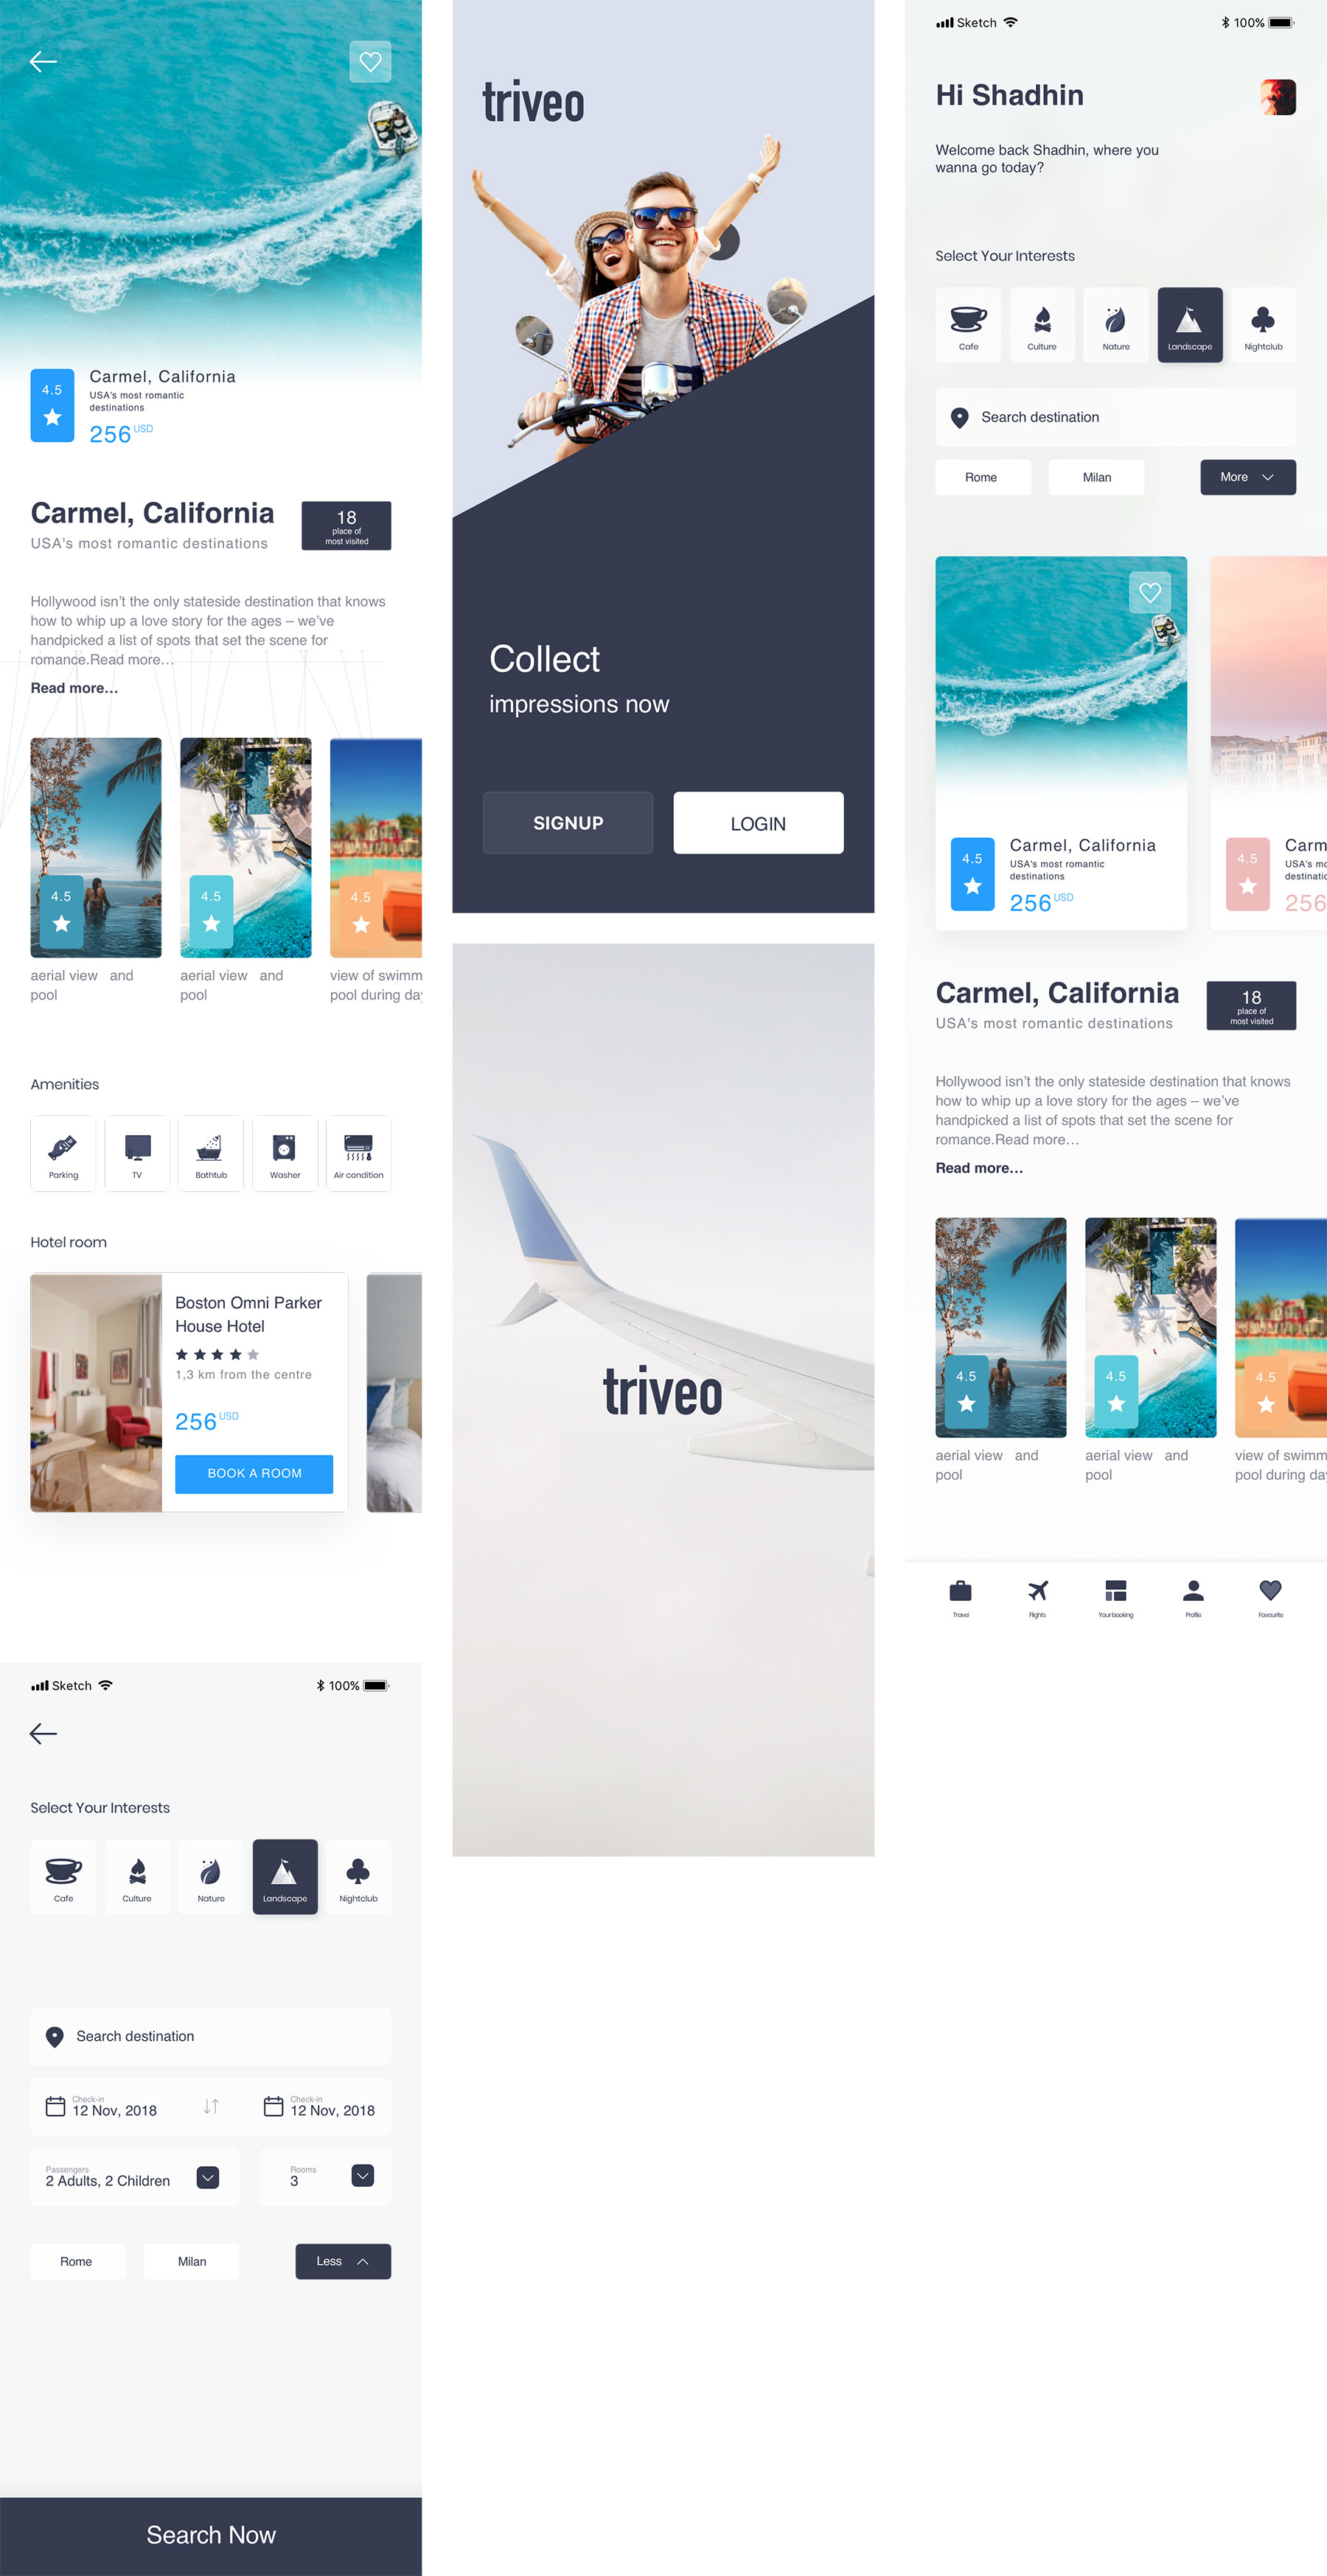 triveo-travel-booking-app-concept.jpg